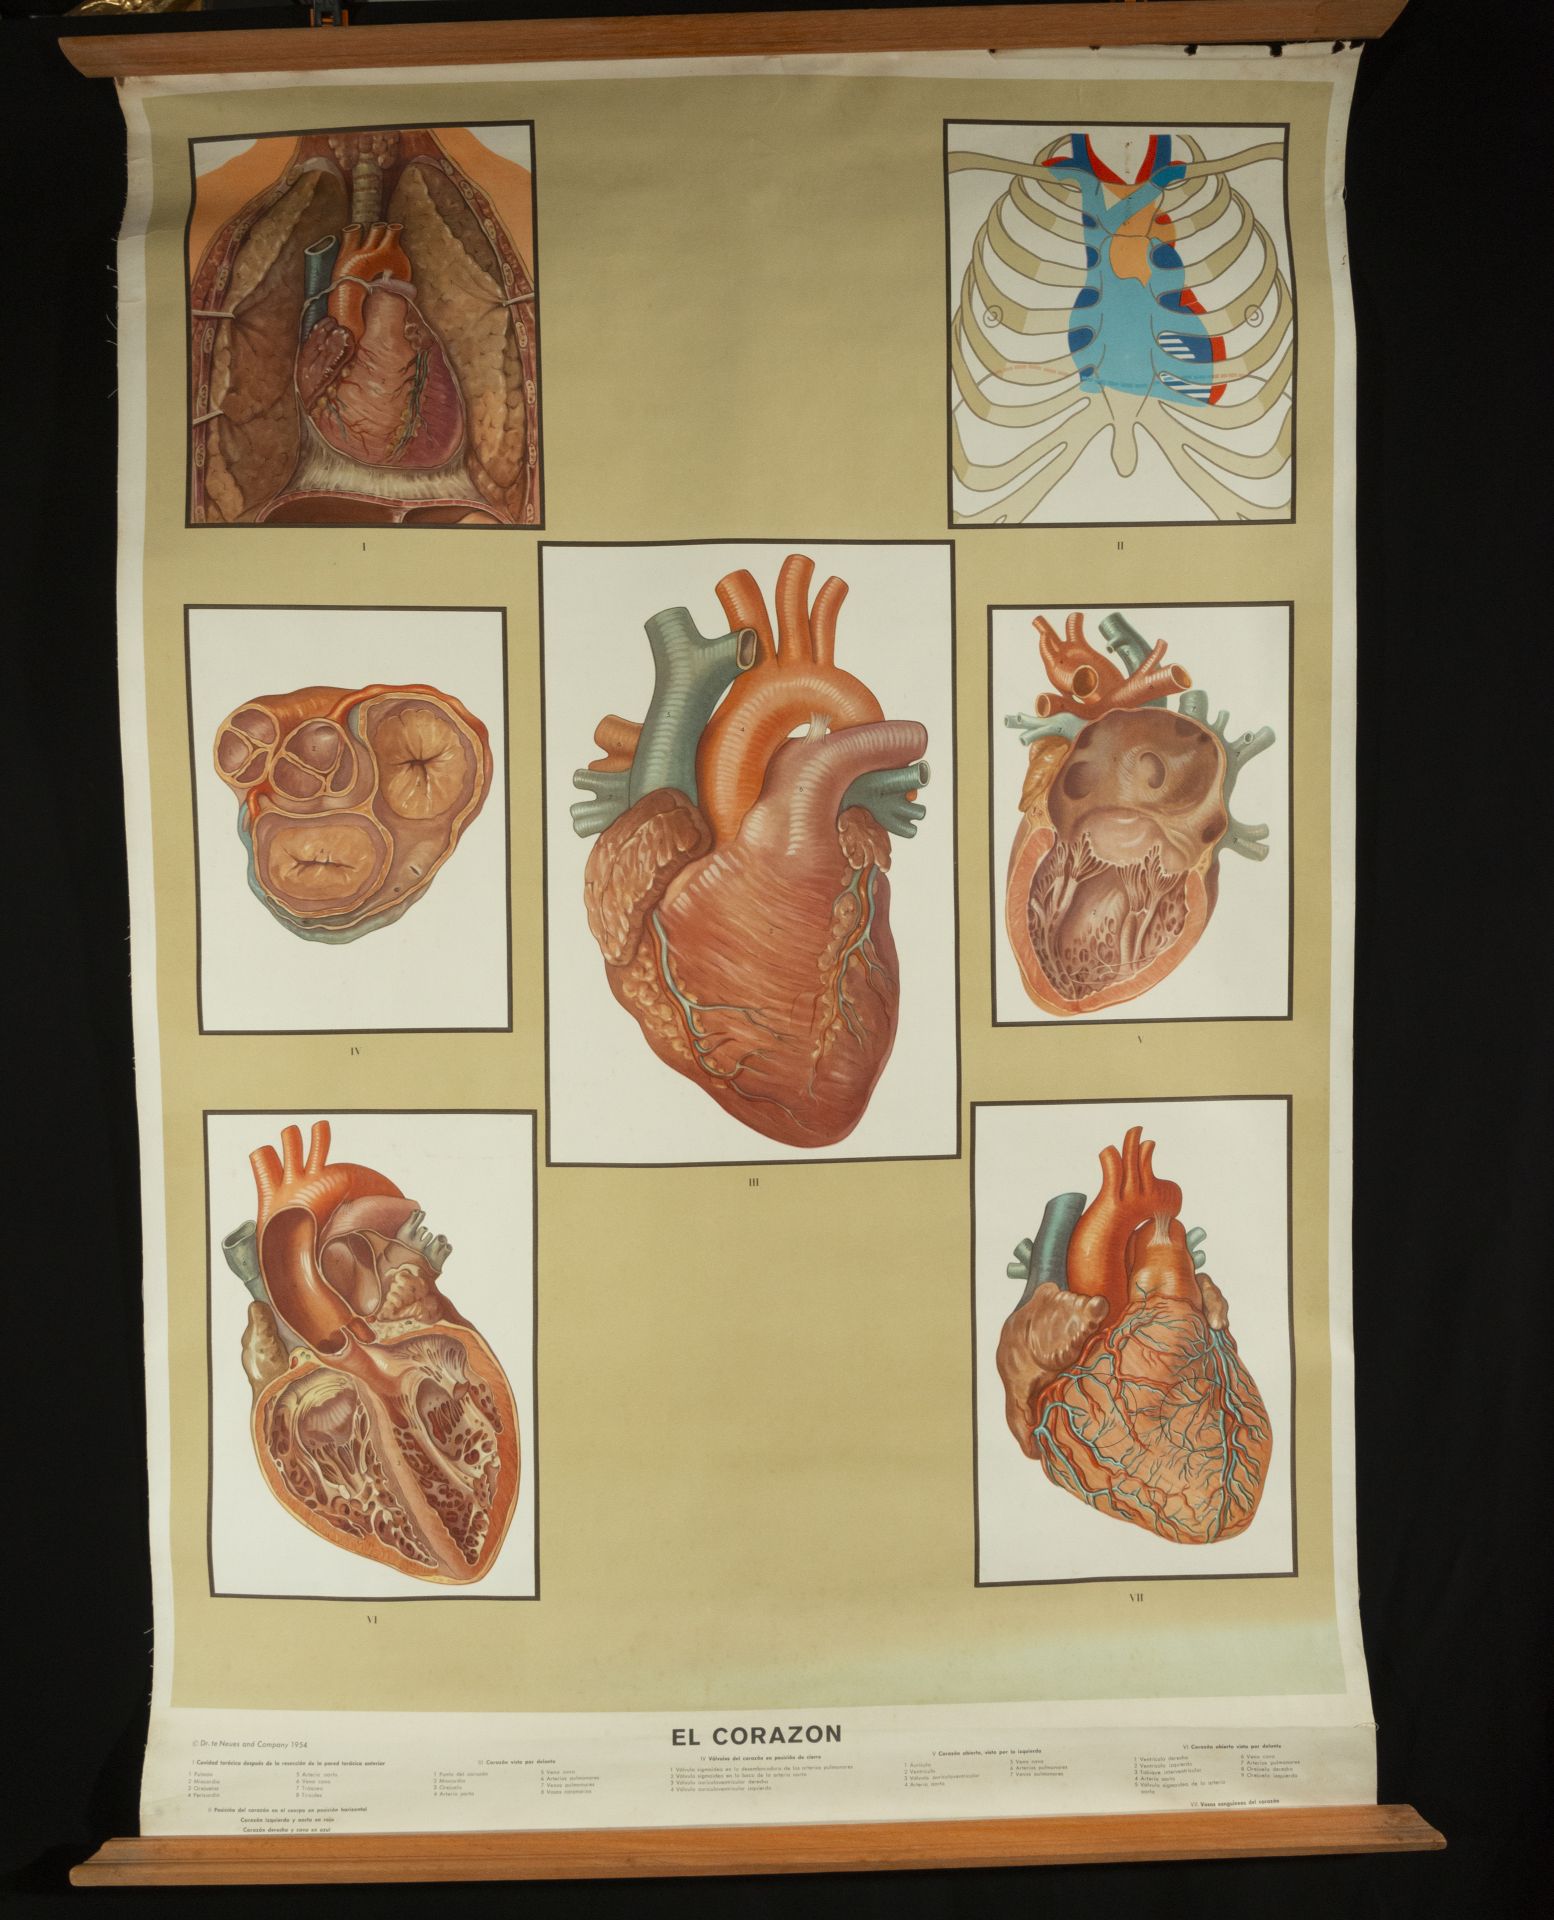 Natural History, Large Medical Illustrative Poster, 1930s-1940s